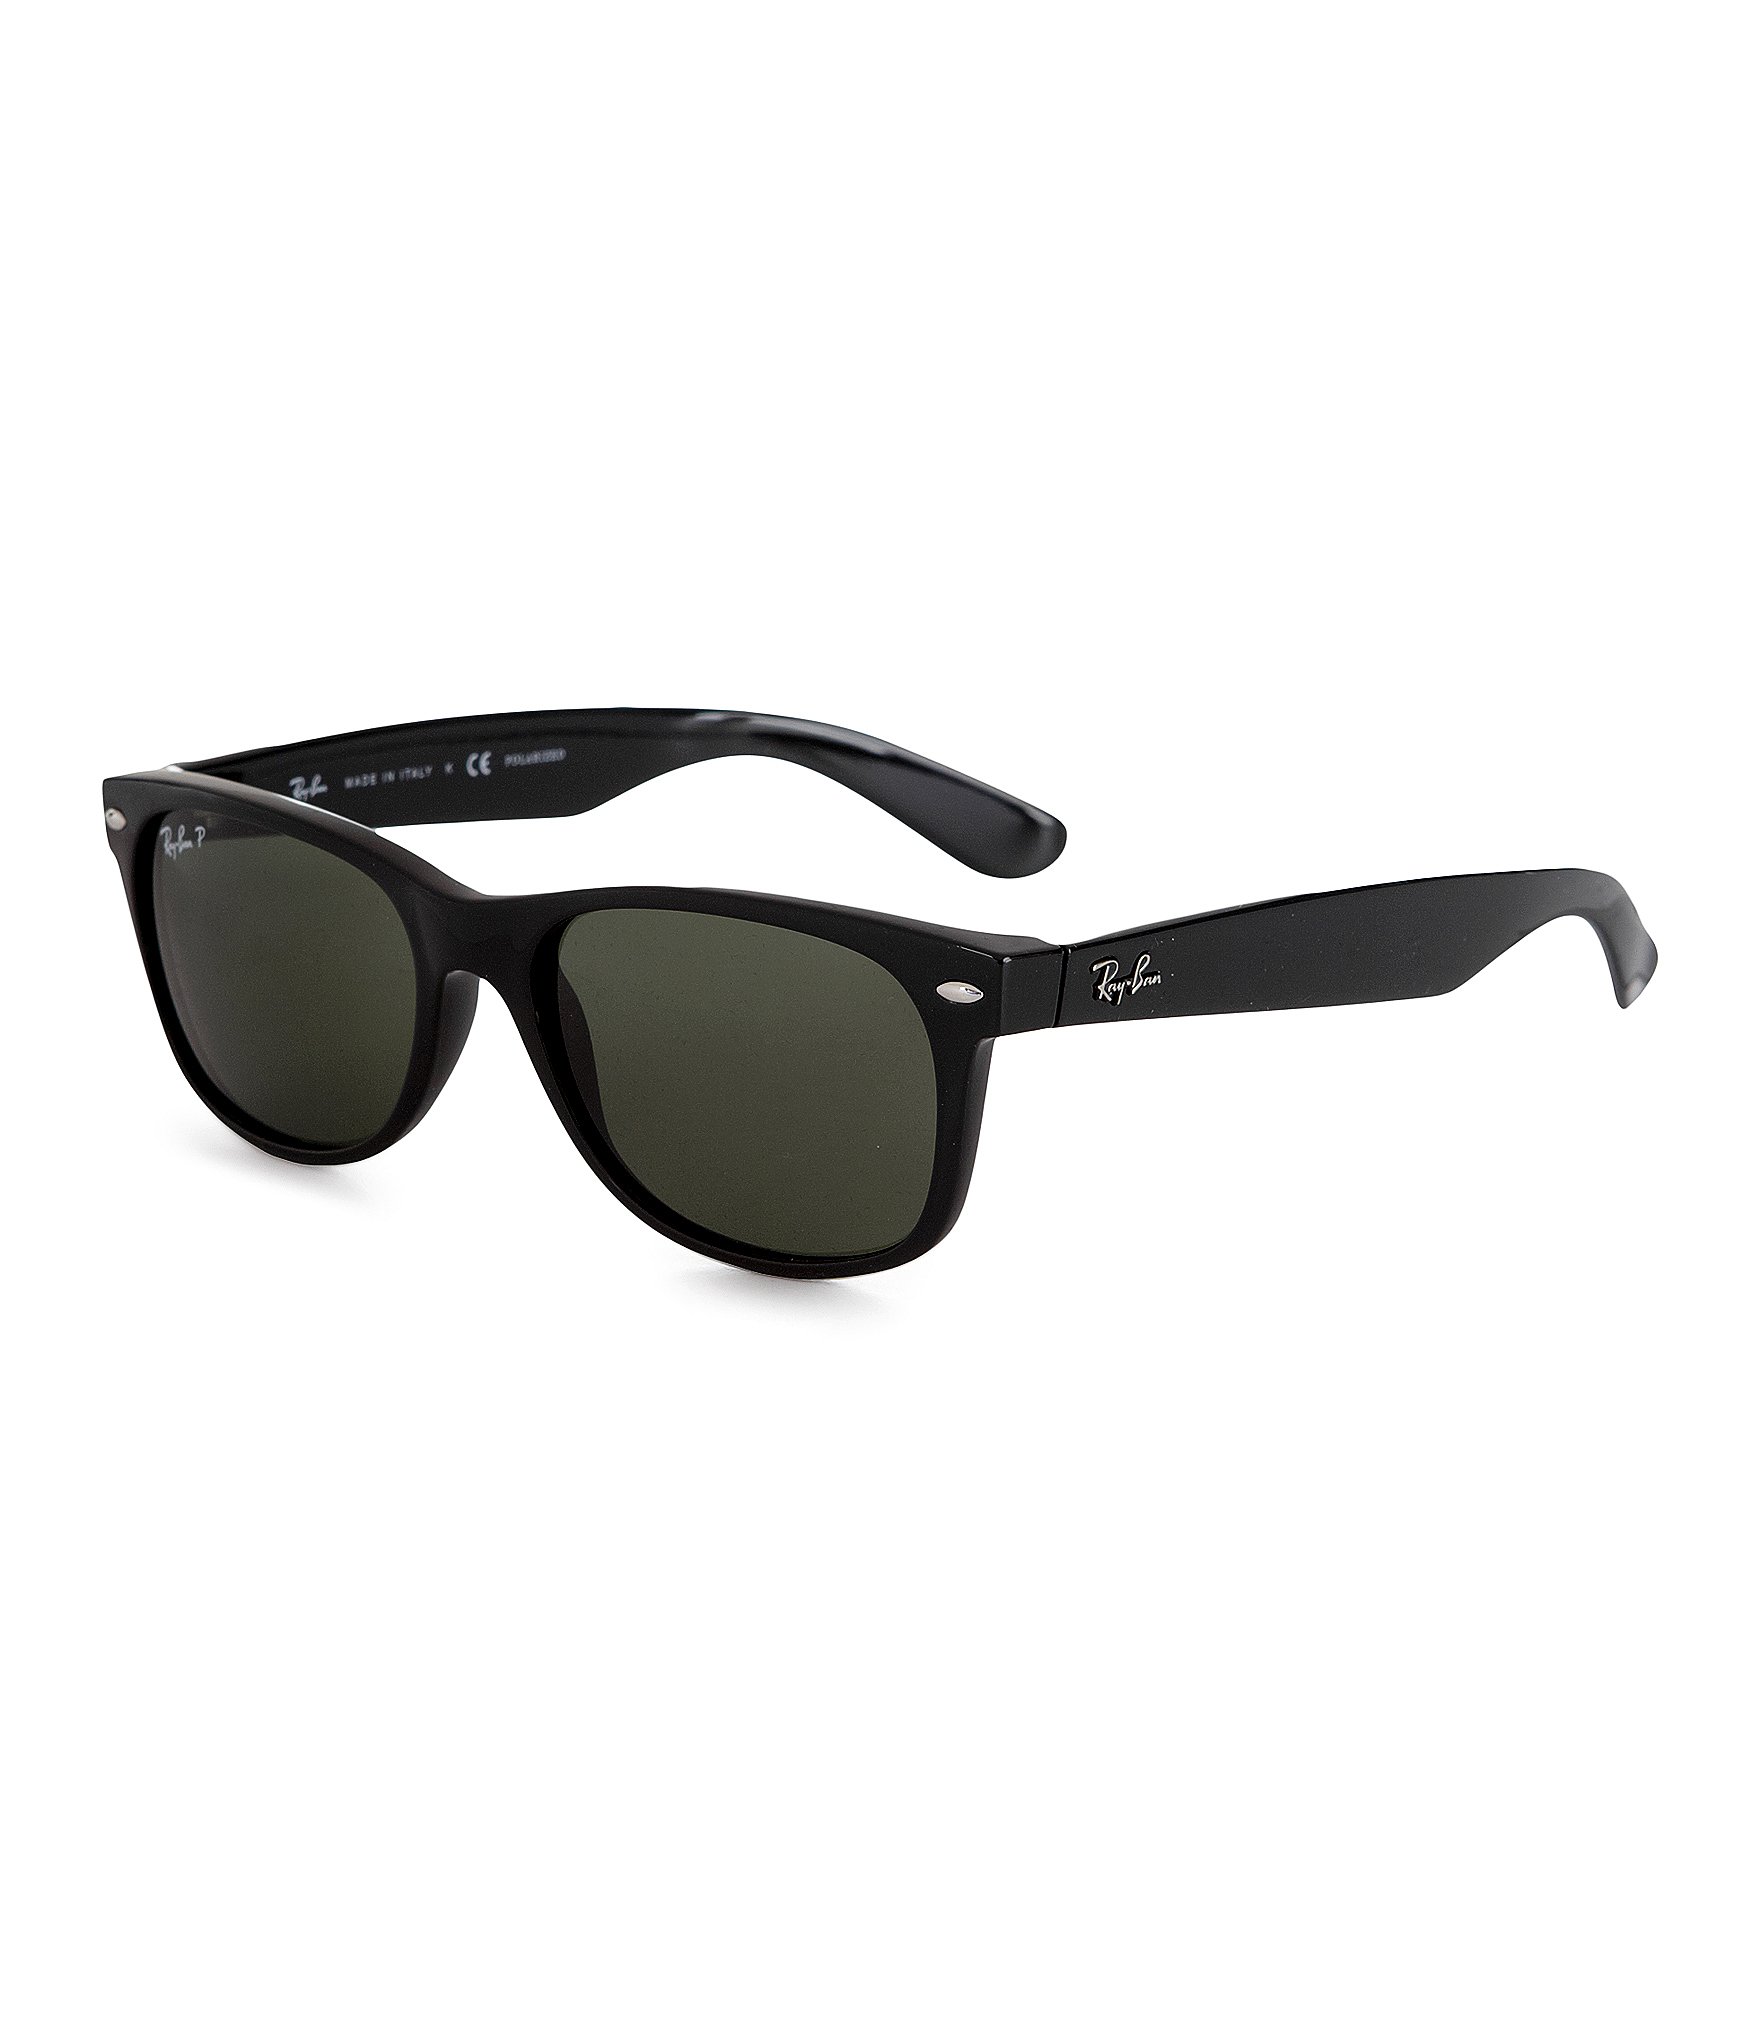 Men's Sunglasses & Eyewear | Dillards